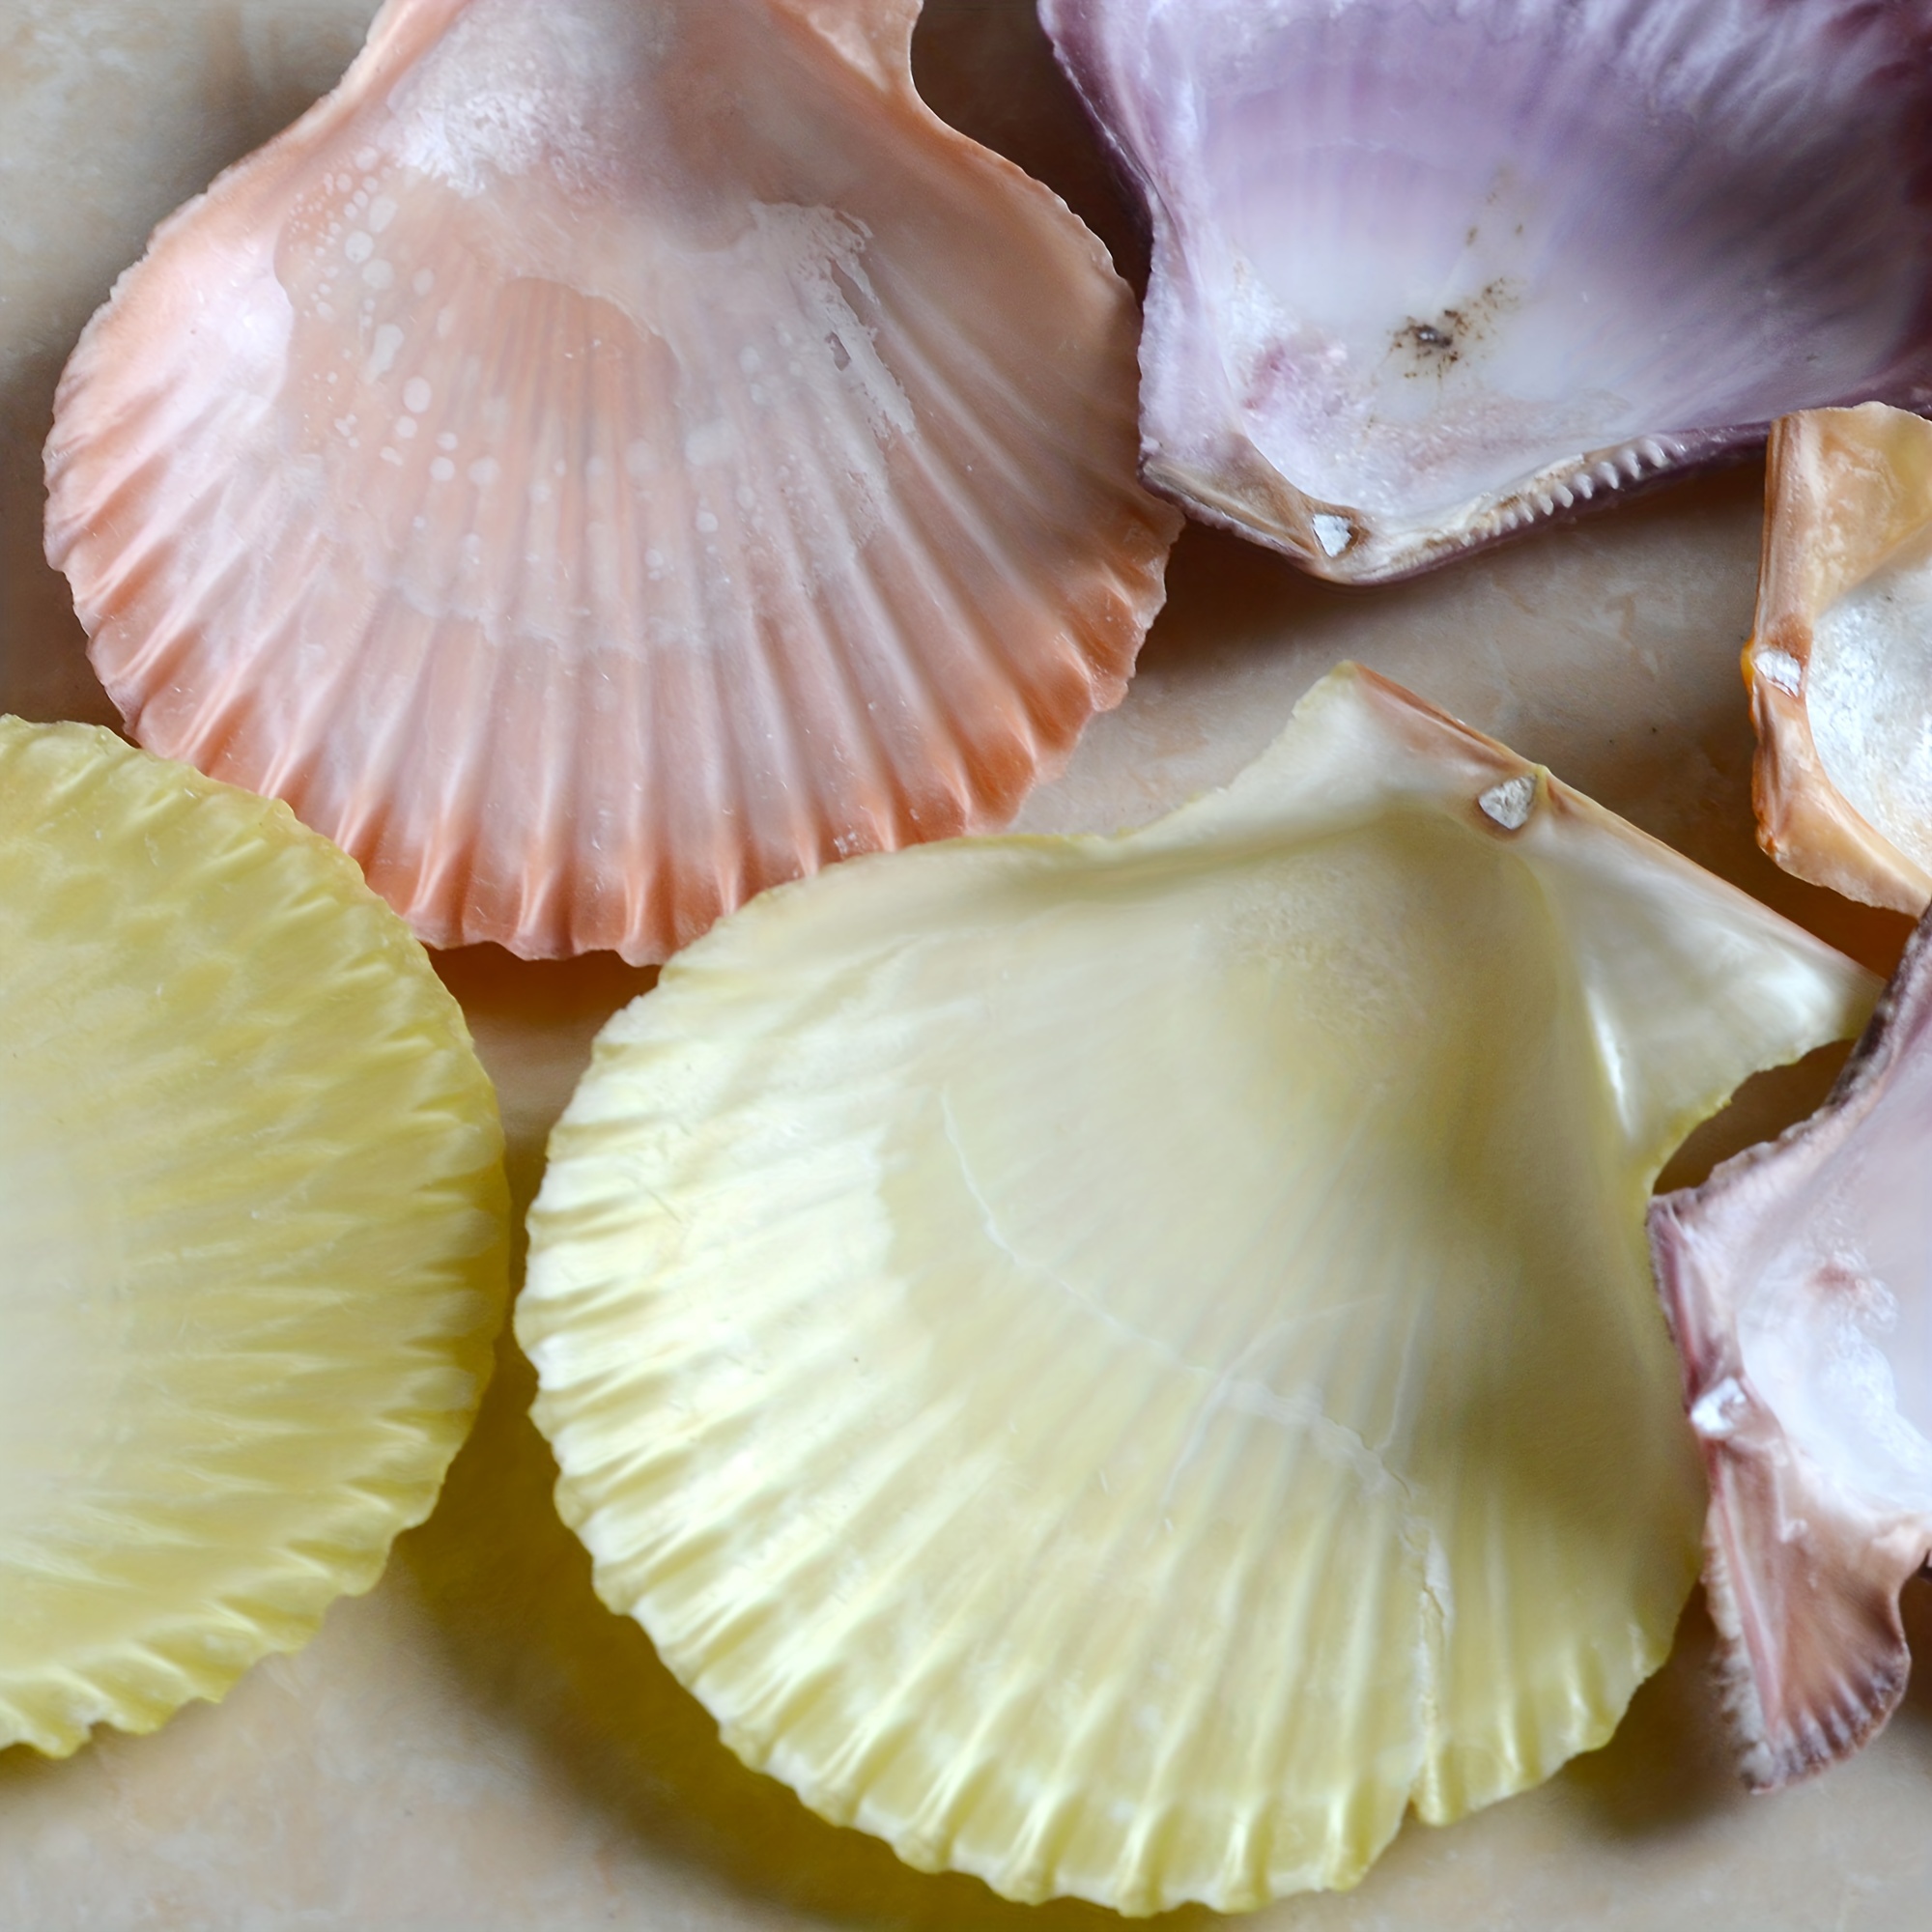 COLORFUL SCALLOP SHELL  Sea shells, Scallop shells, Types of shells